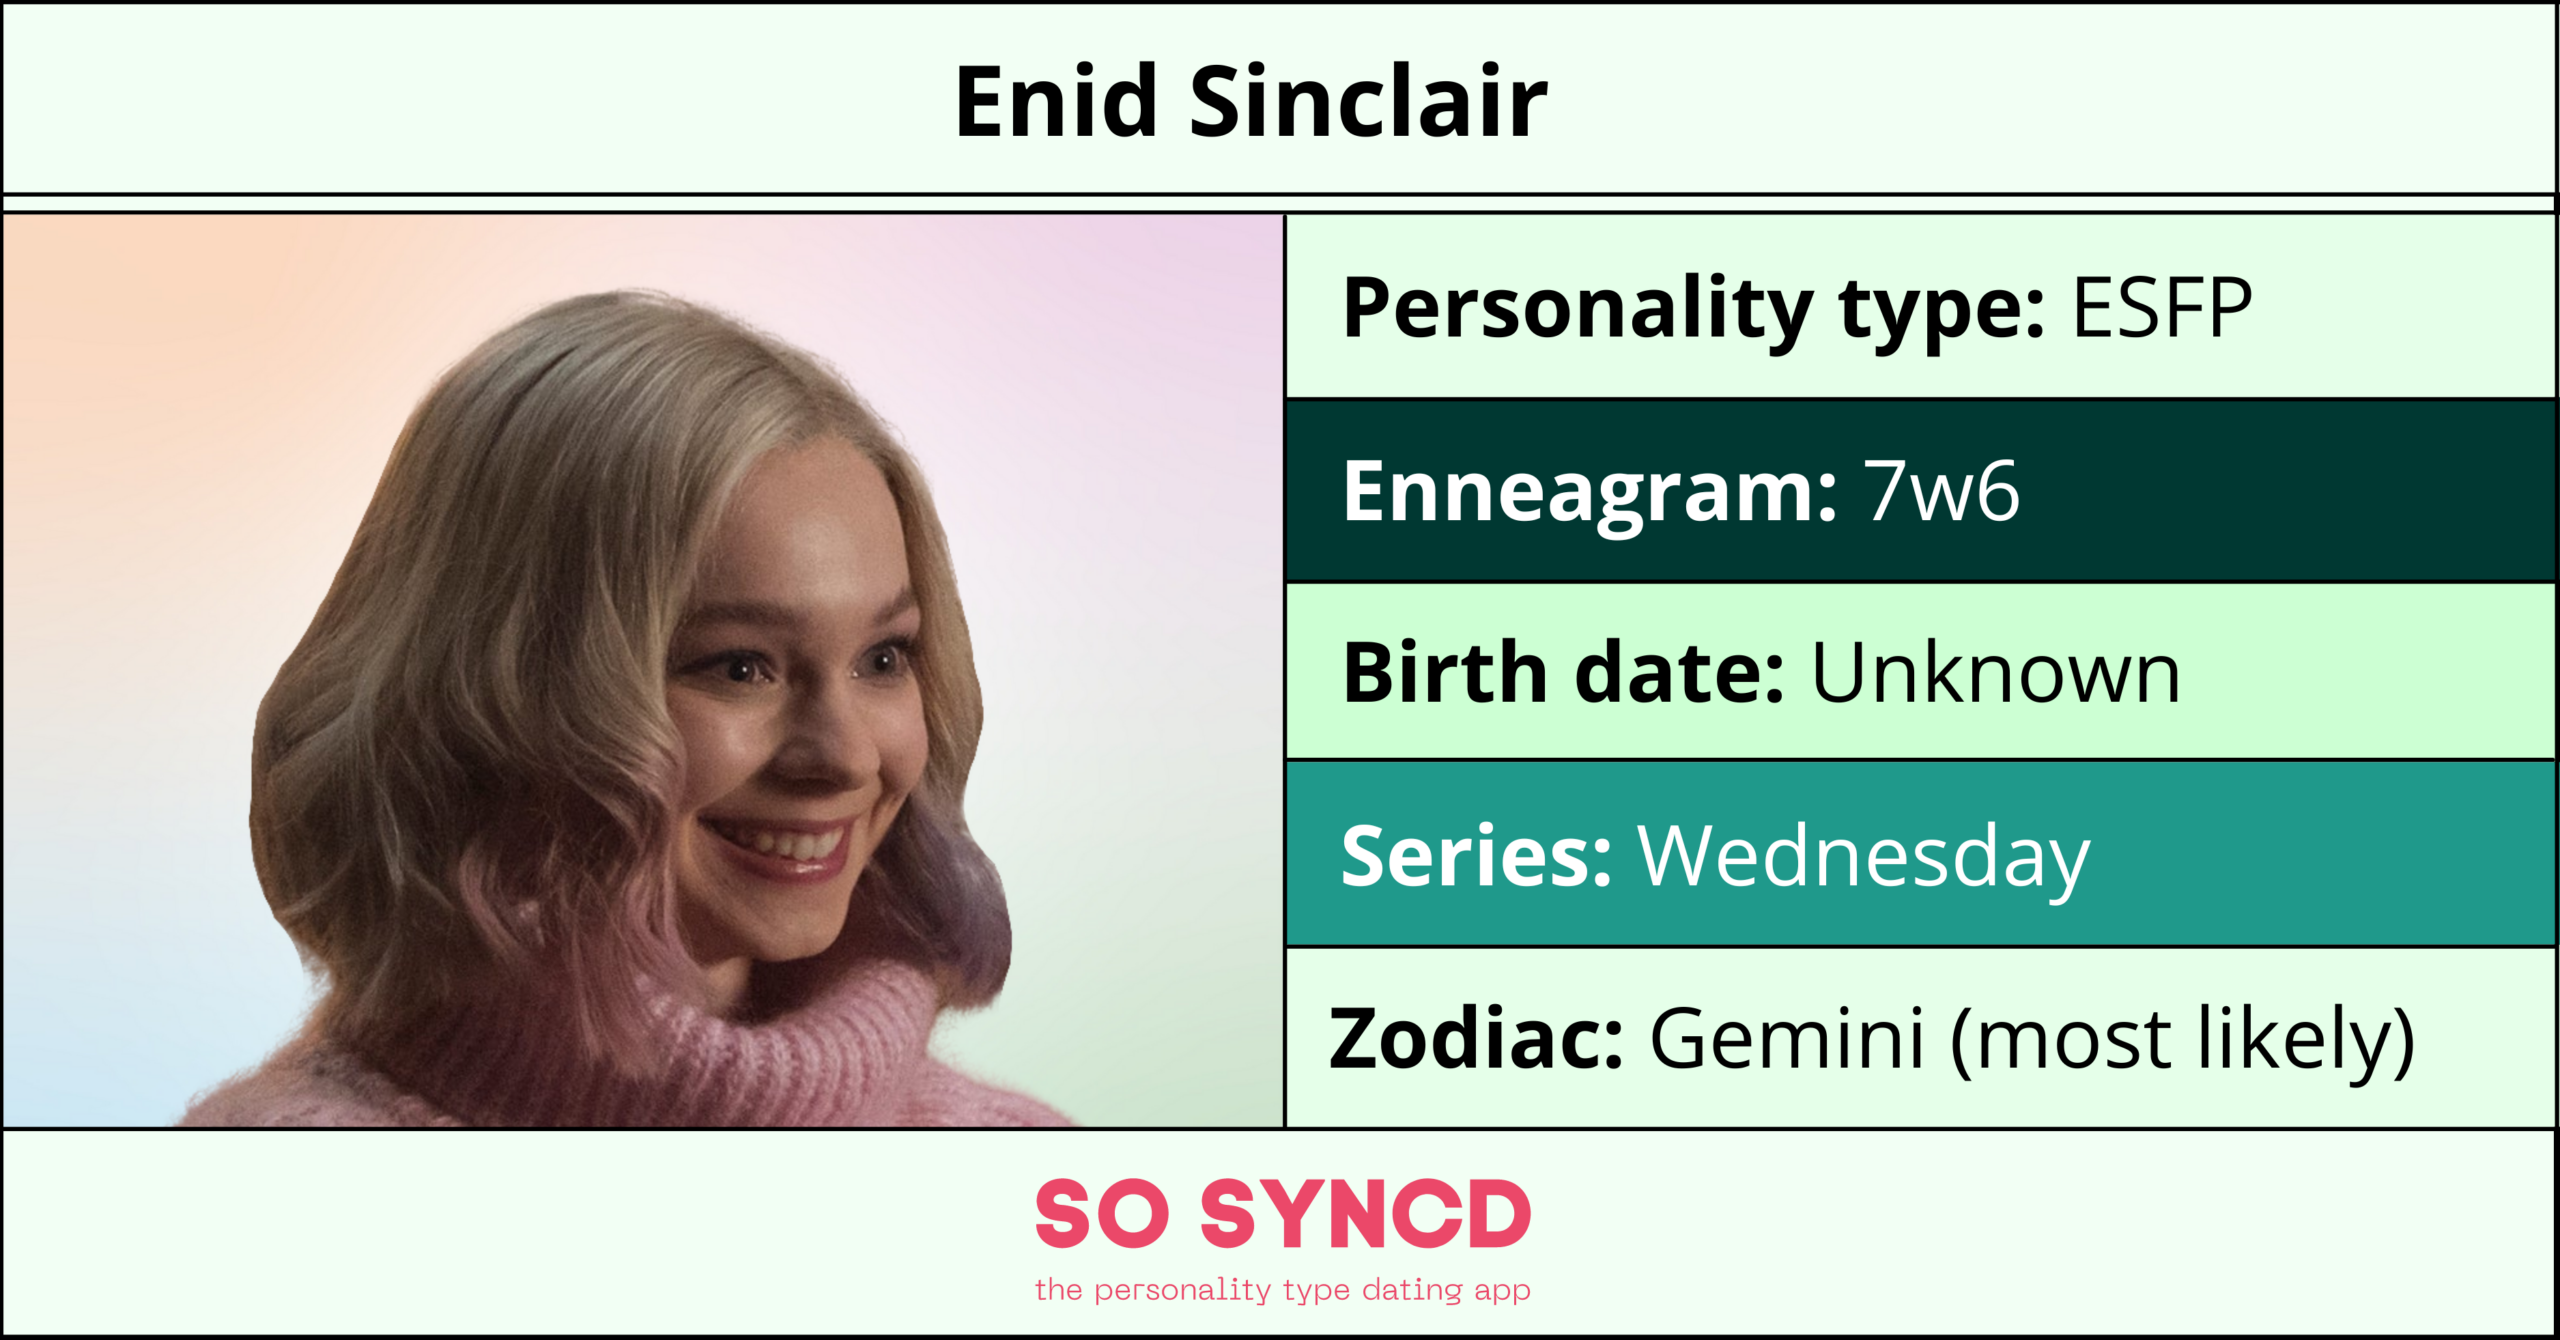 Wednesday Addams Personality Type, Zodiac Sign & Enneagram